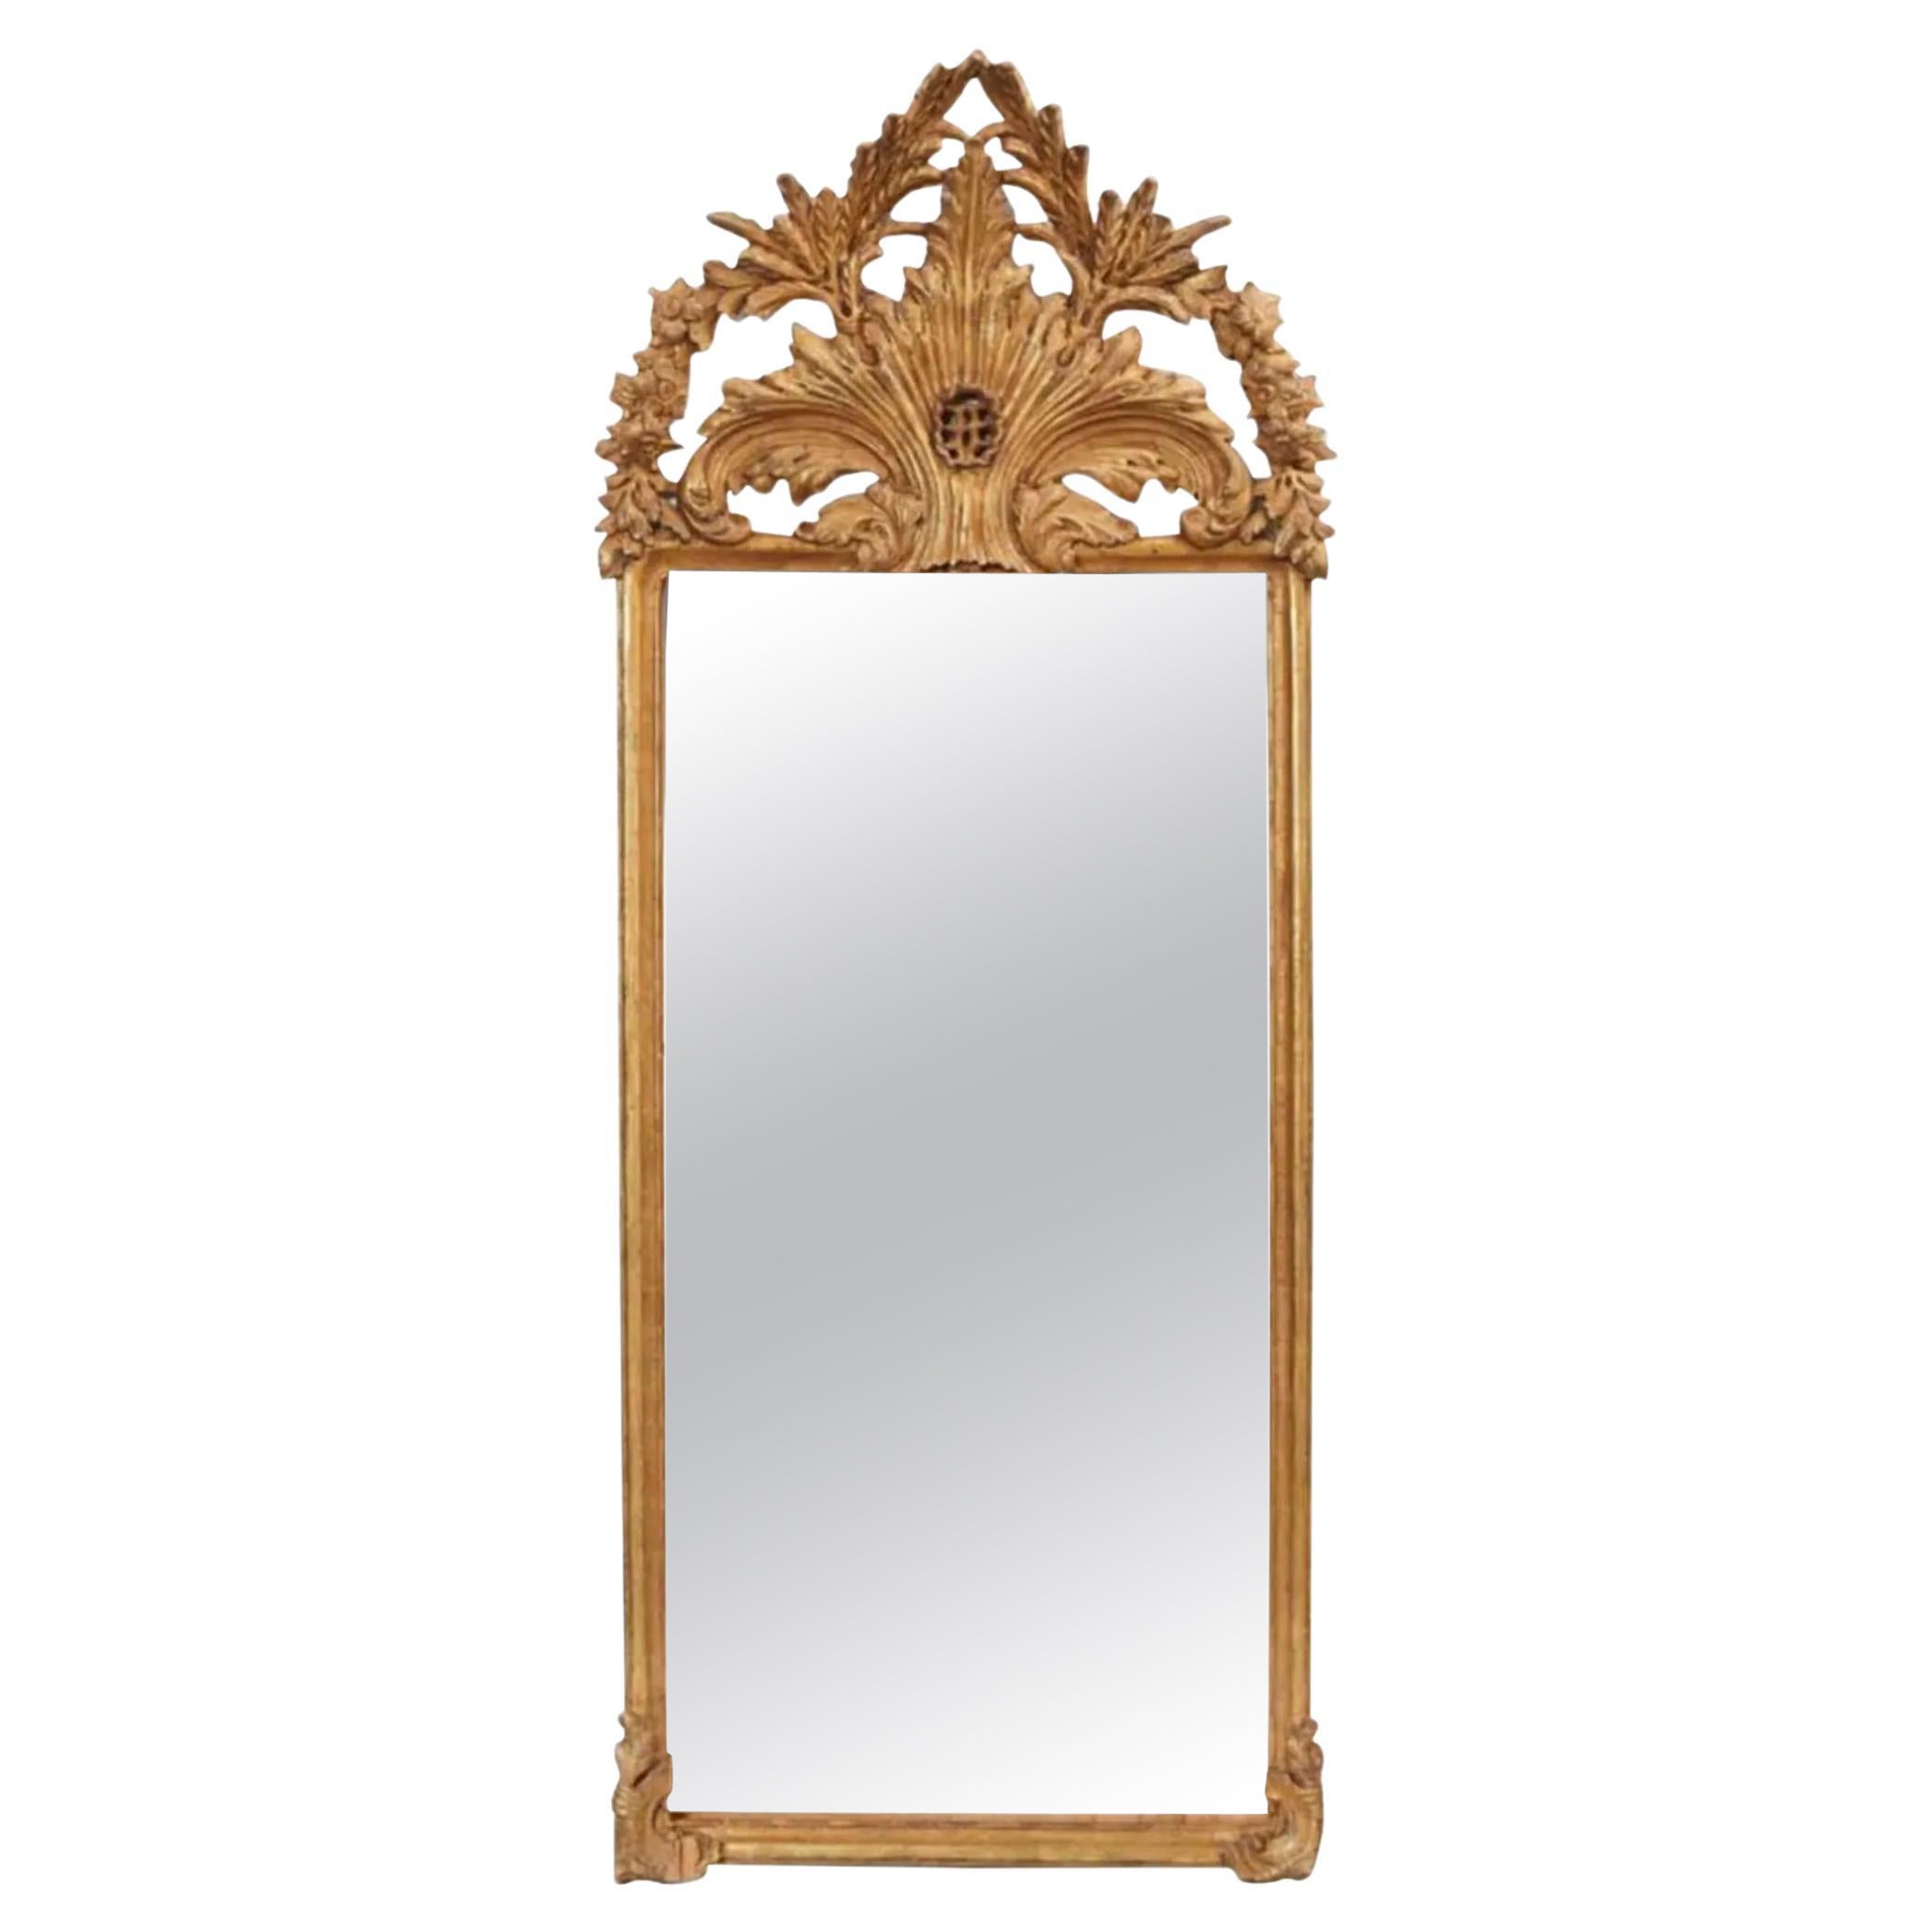 Spiegel im Stil des 18. Jahrhunderts Hendrix Allardyce Rokoko-Stil La Rochelle